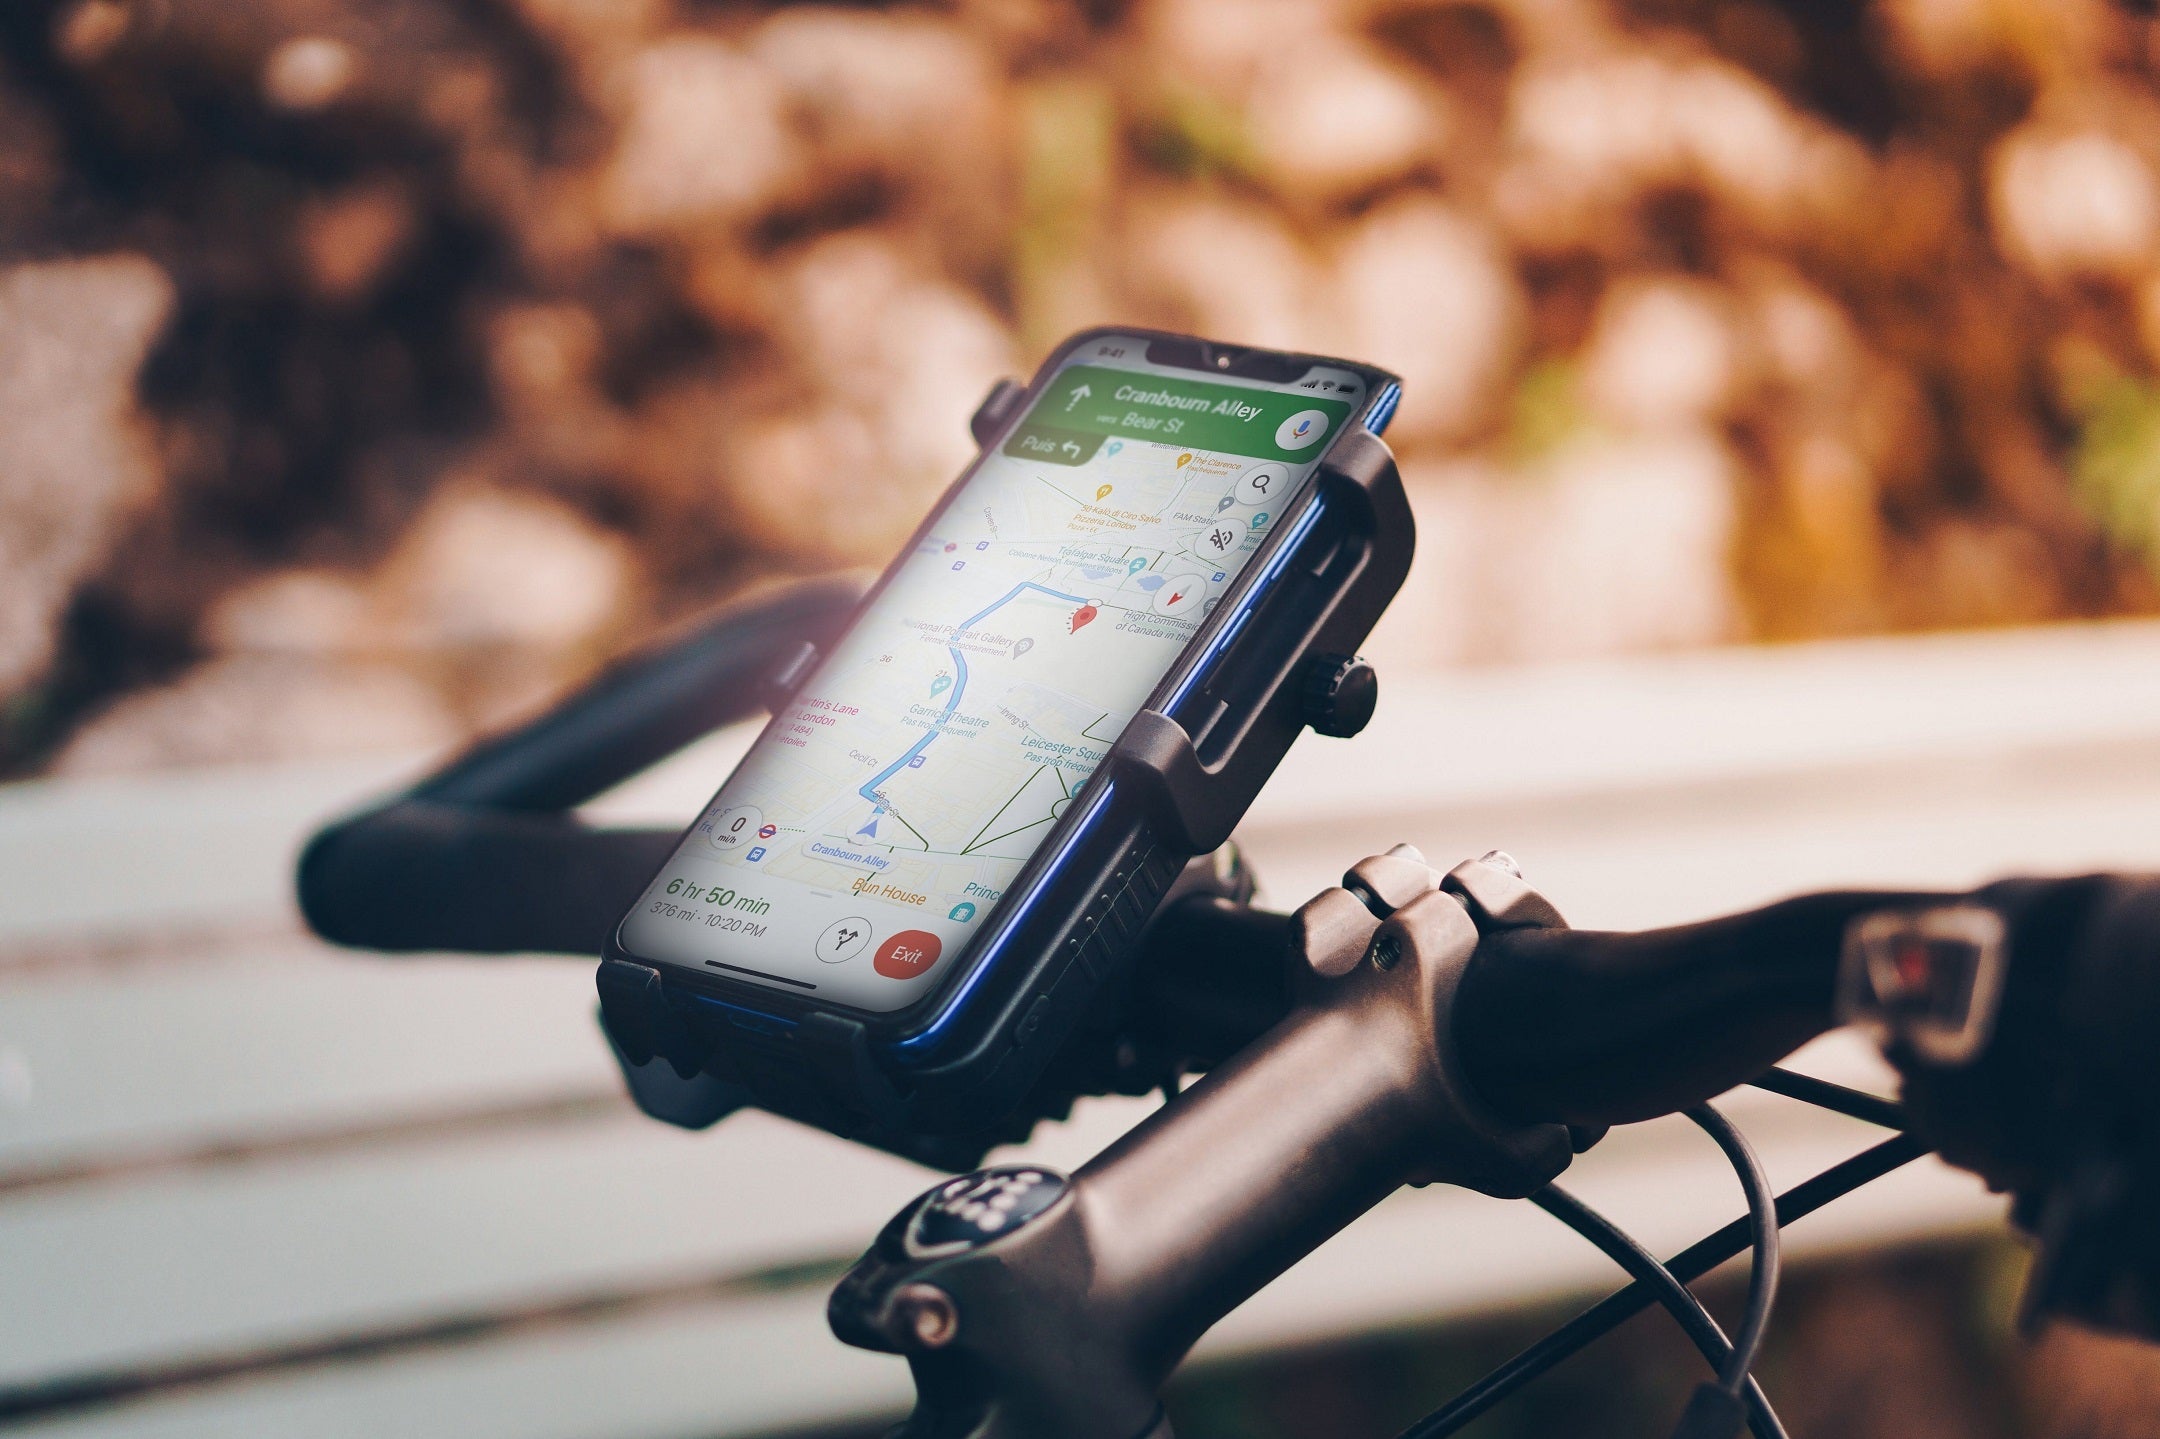 smartphone with GPS on bike phone holder